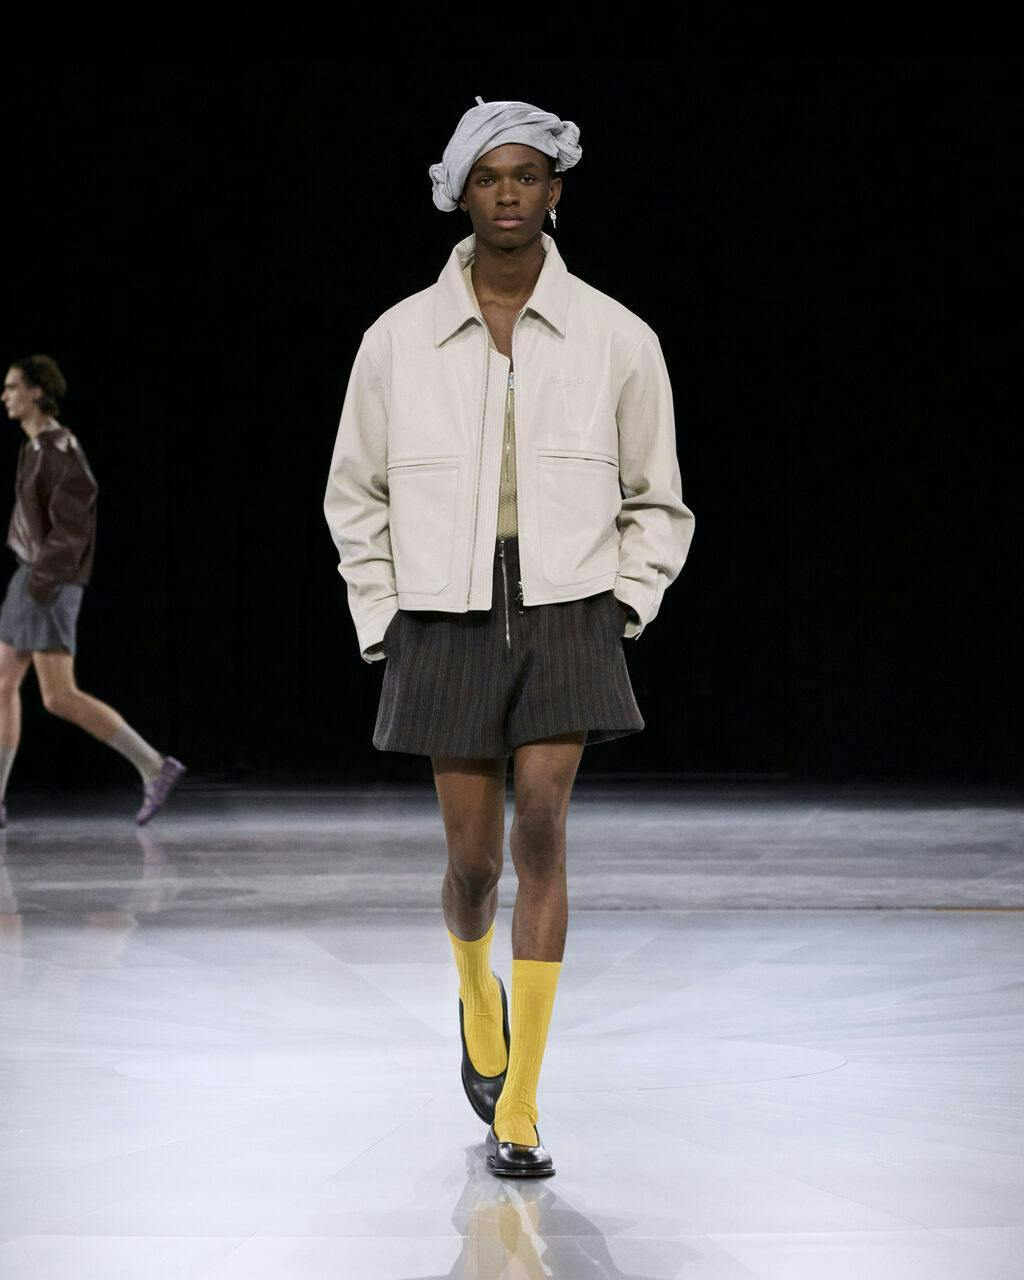 fashion clothing skirt jacket adult male man person long sleeve shoe